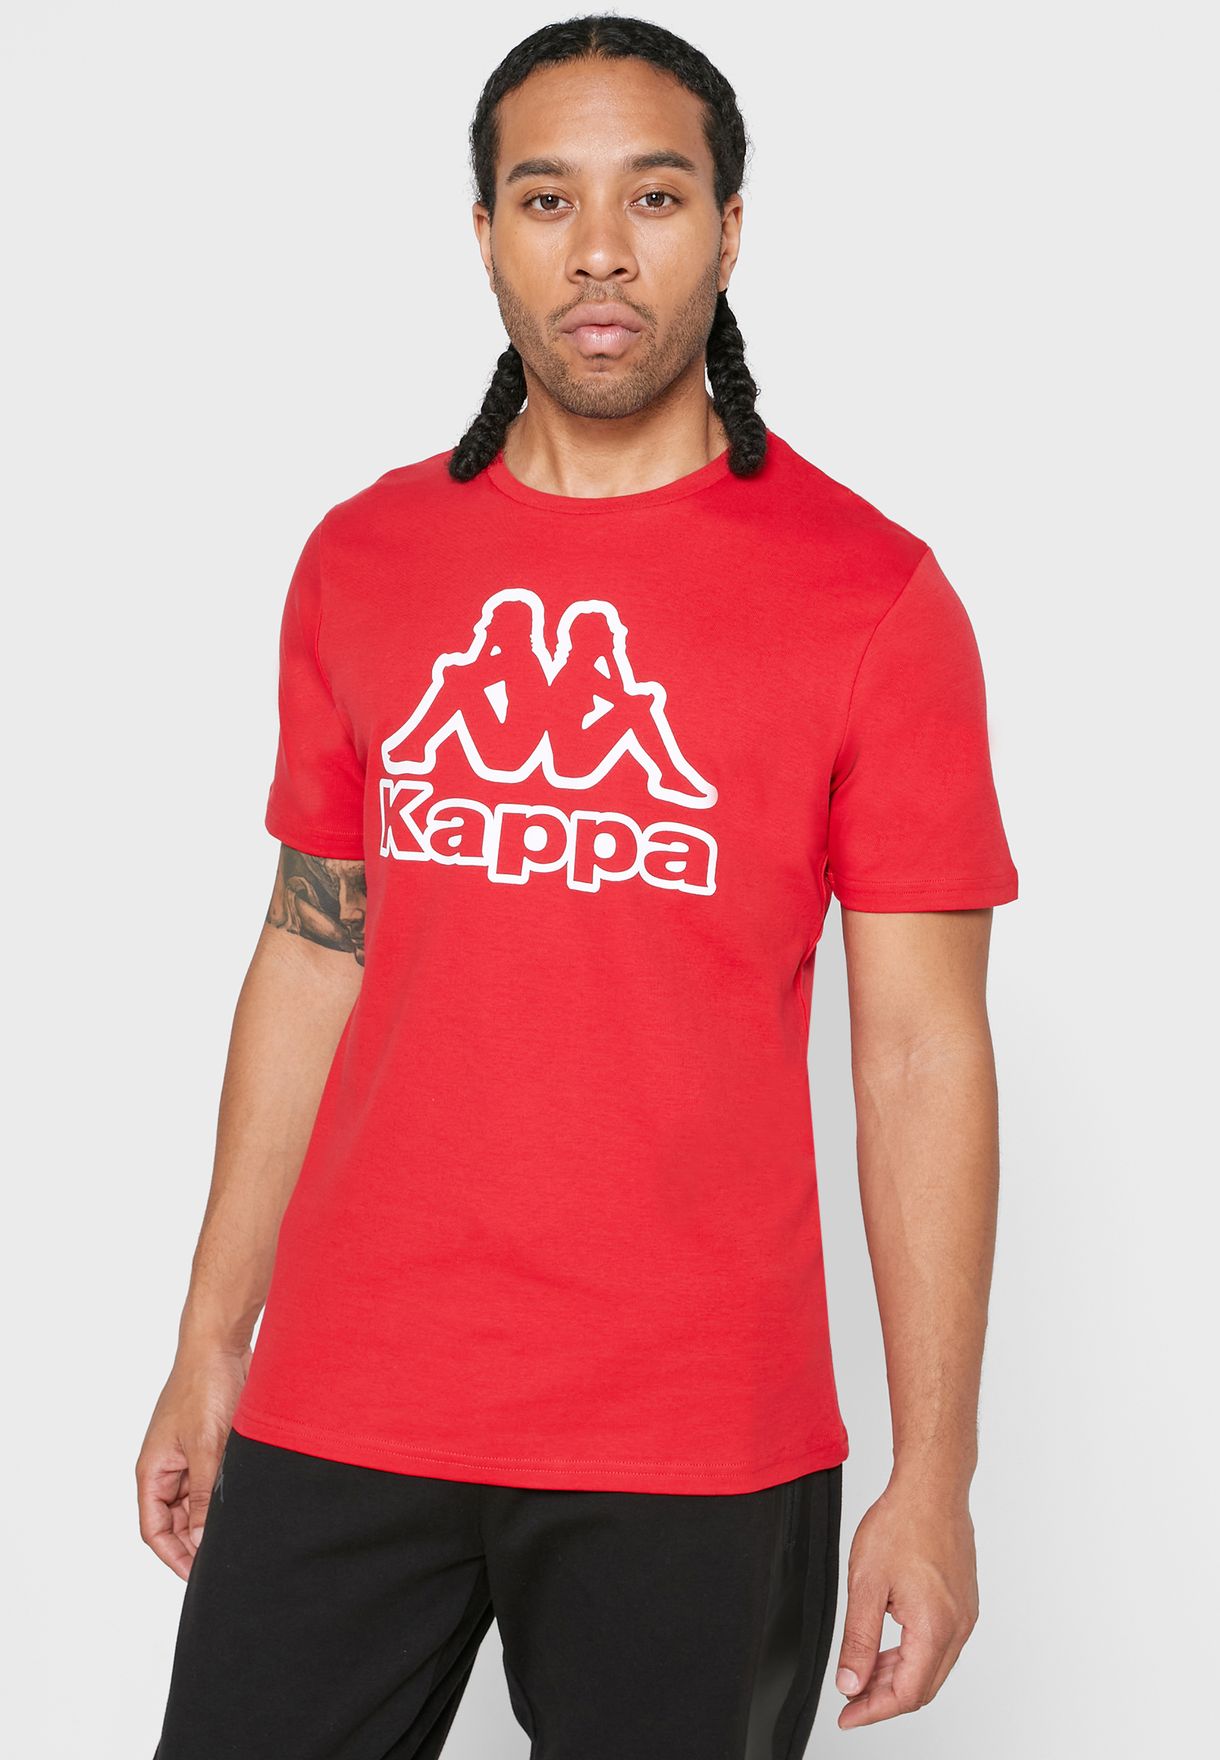 kappa red shirt